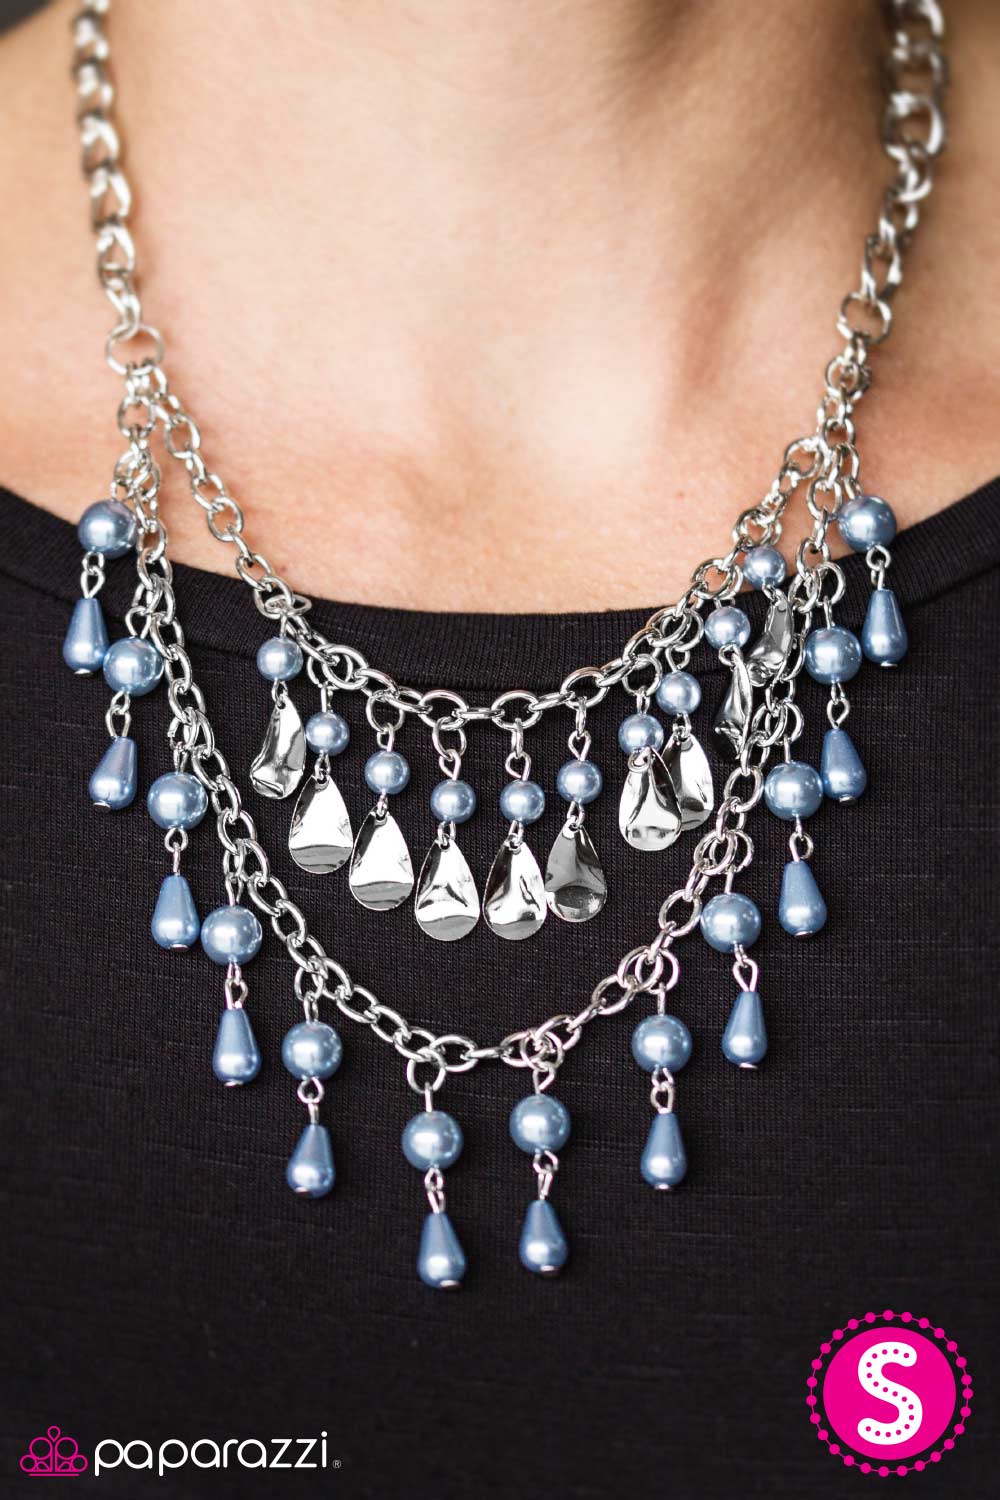 The Drop Top - Blue - Paparazzi necklace